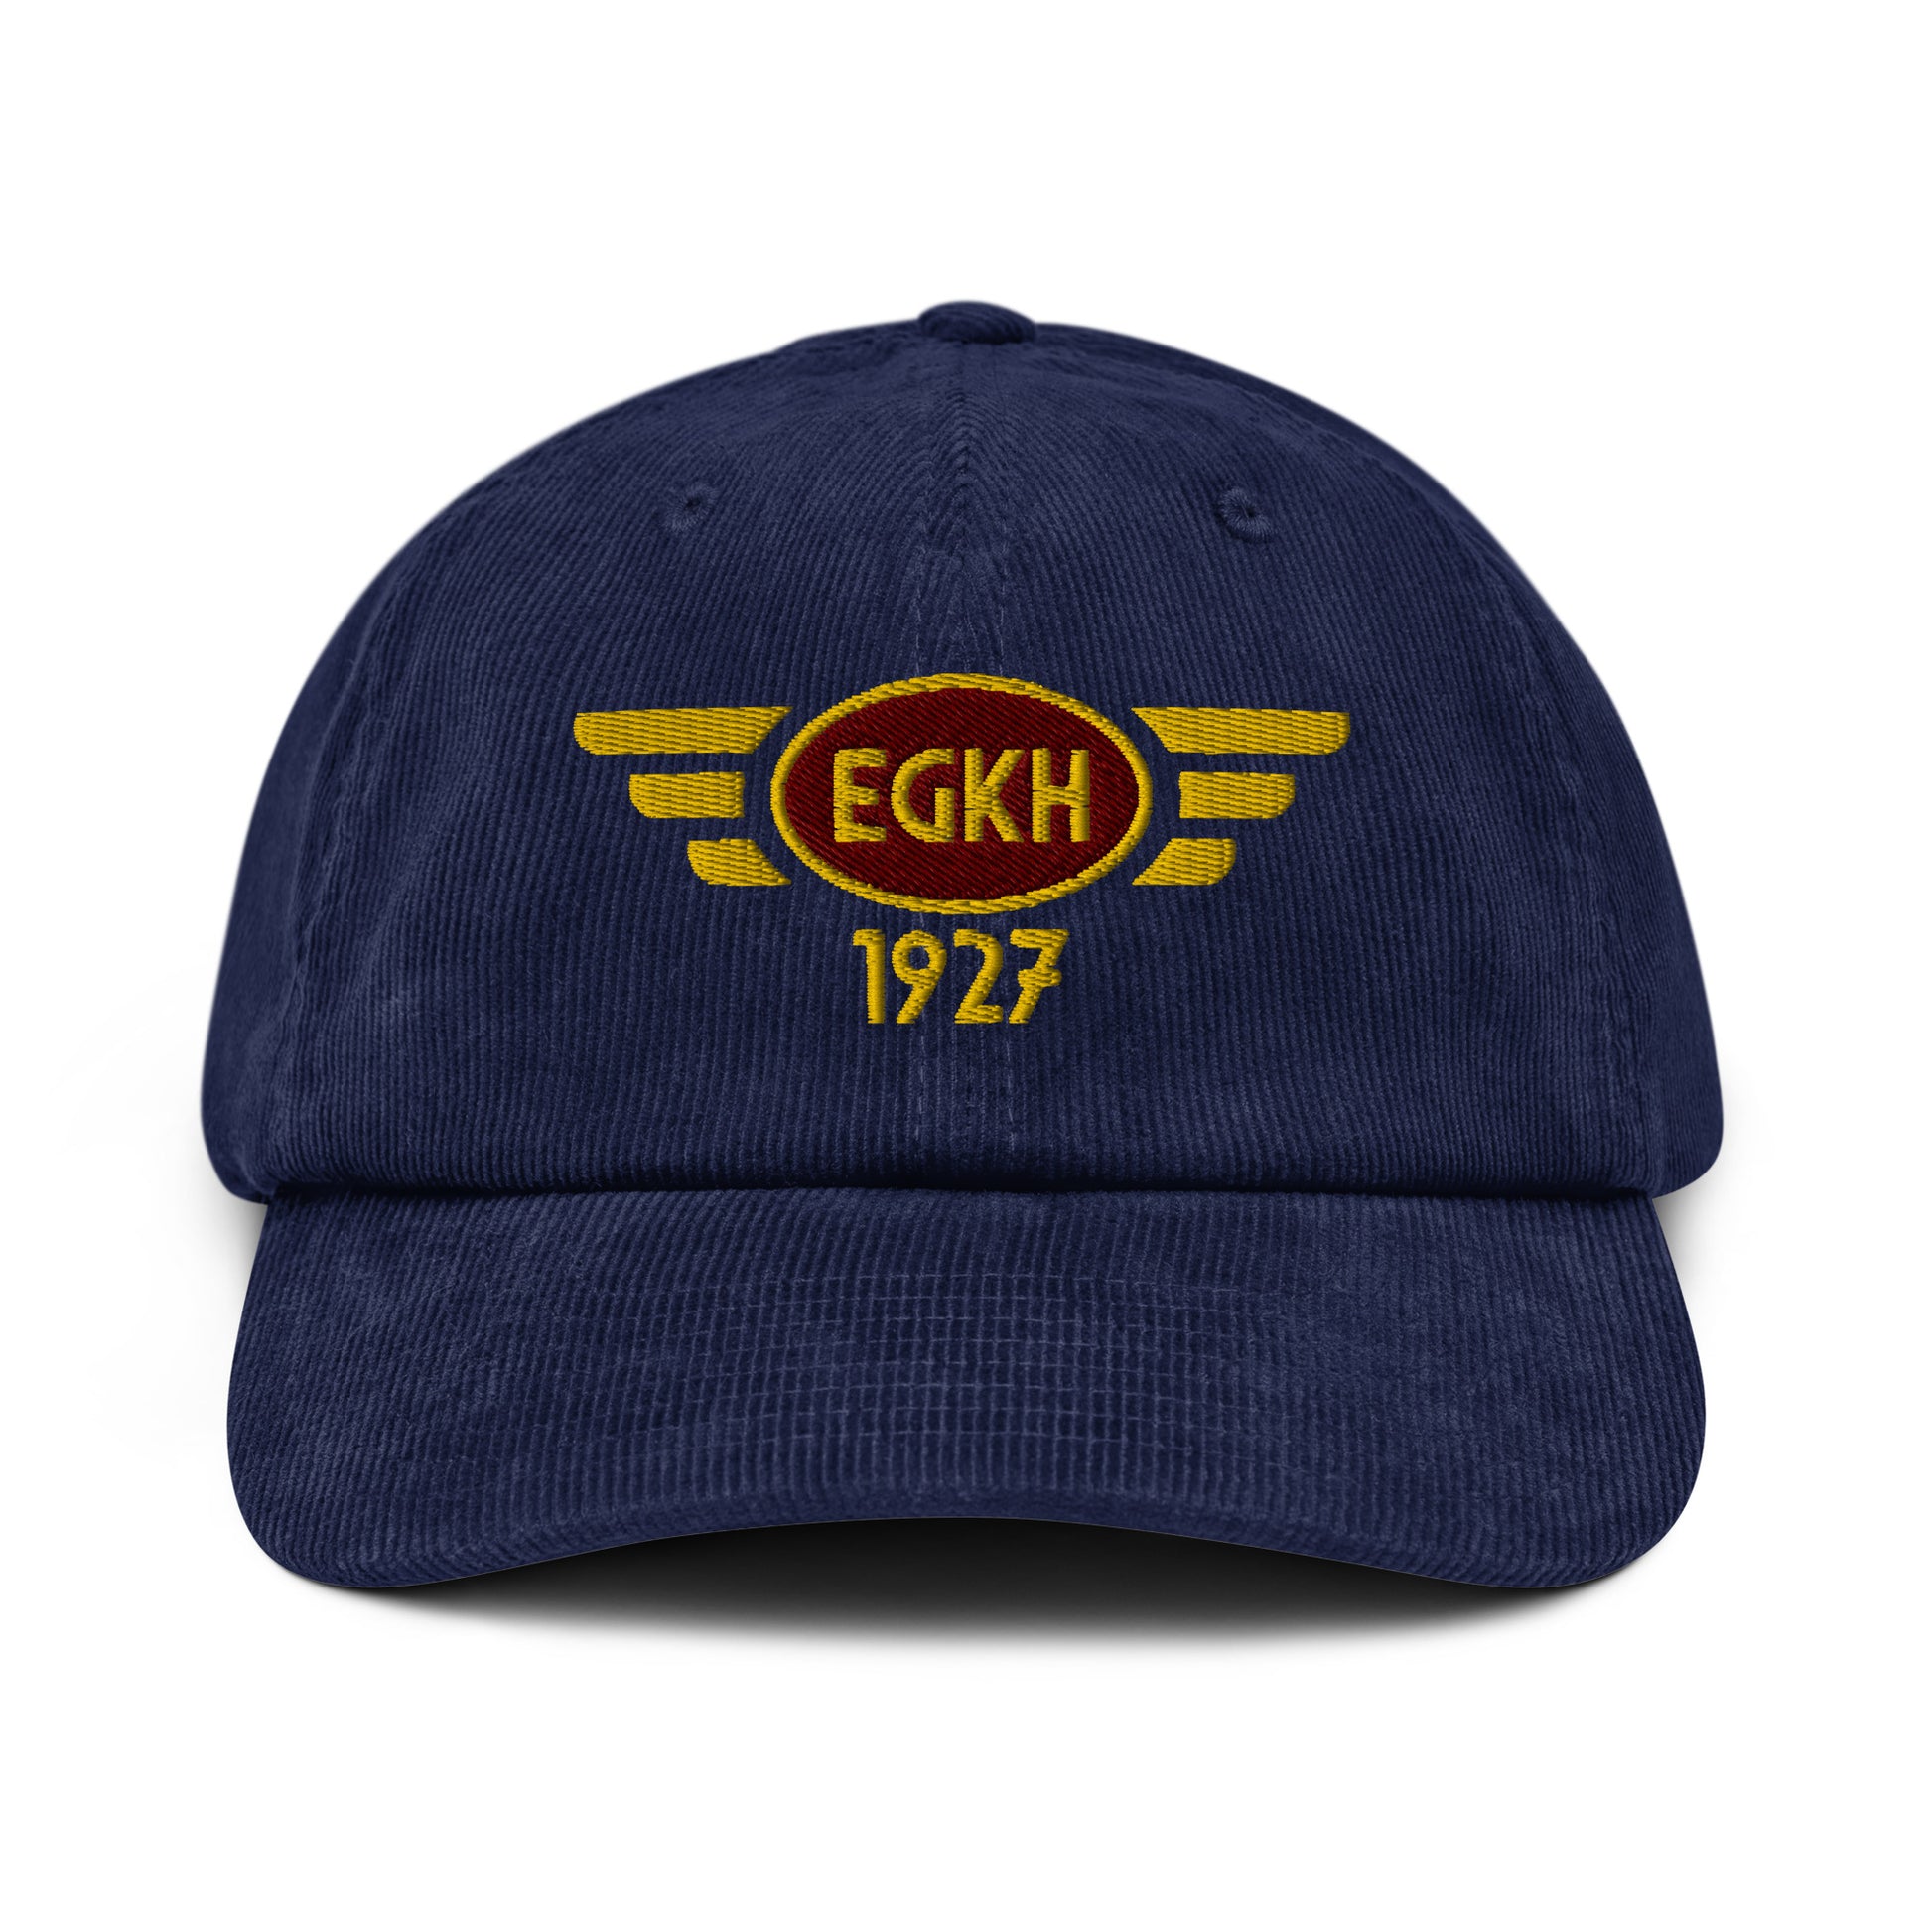 Oxford navy blue coloured corduroy baseball cap with embroidered vintage style aviation logo for Headcorn Aerodrome.